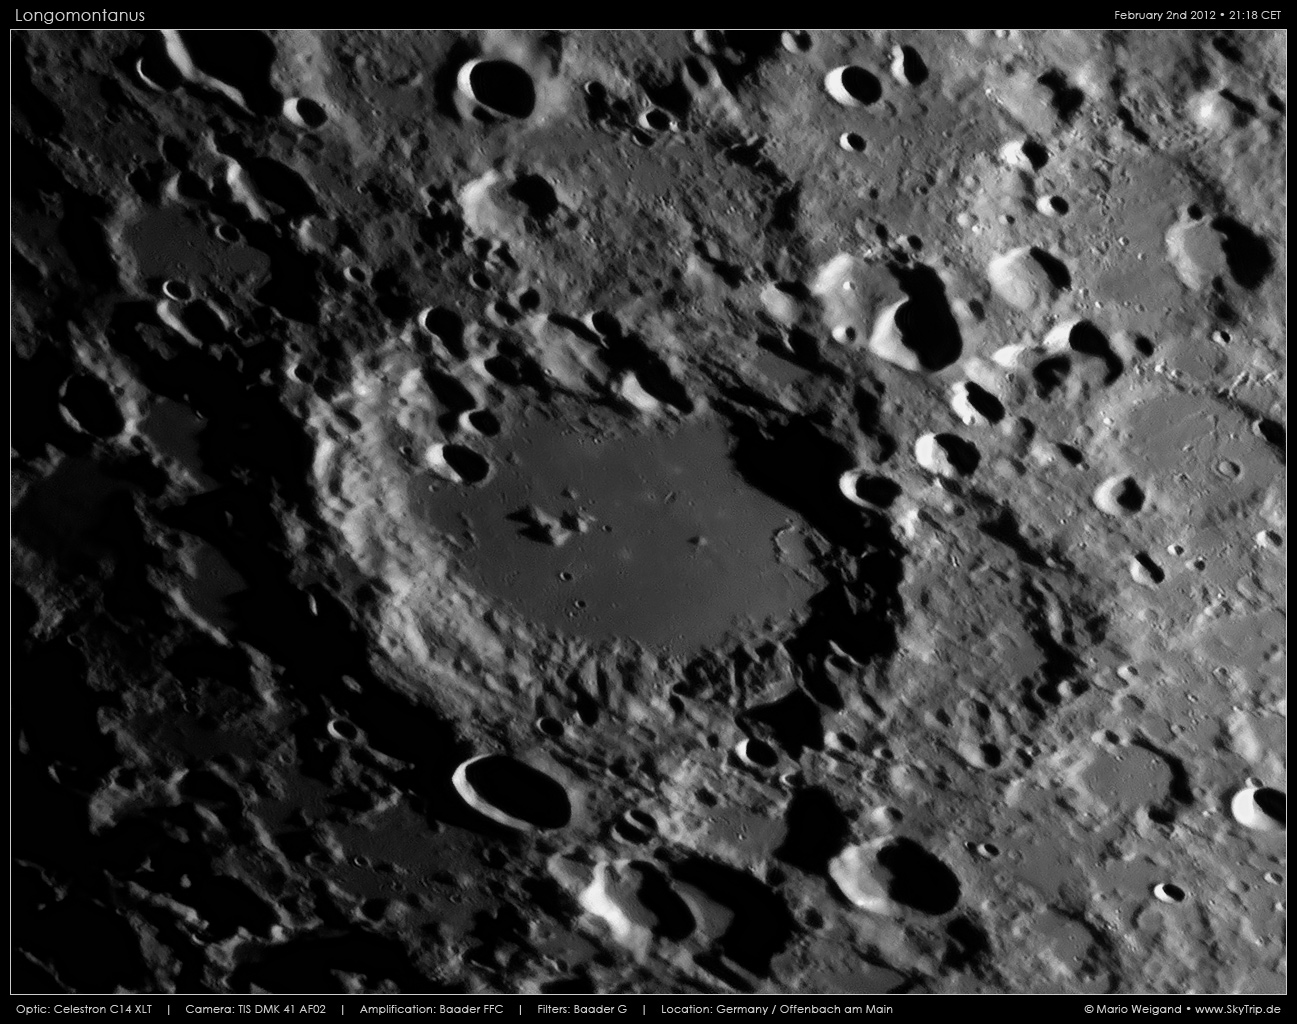 Mondfoto: Krater Longomontanus